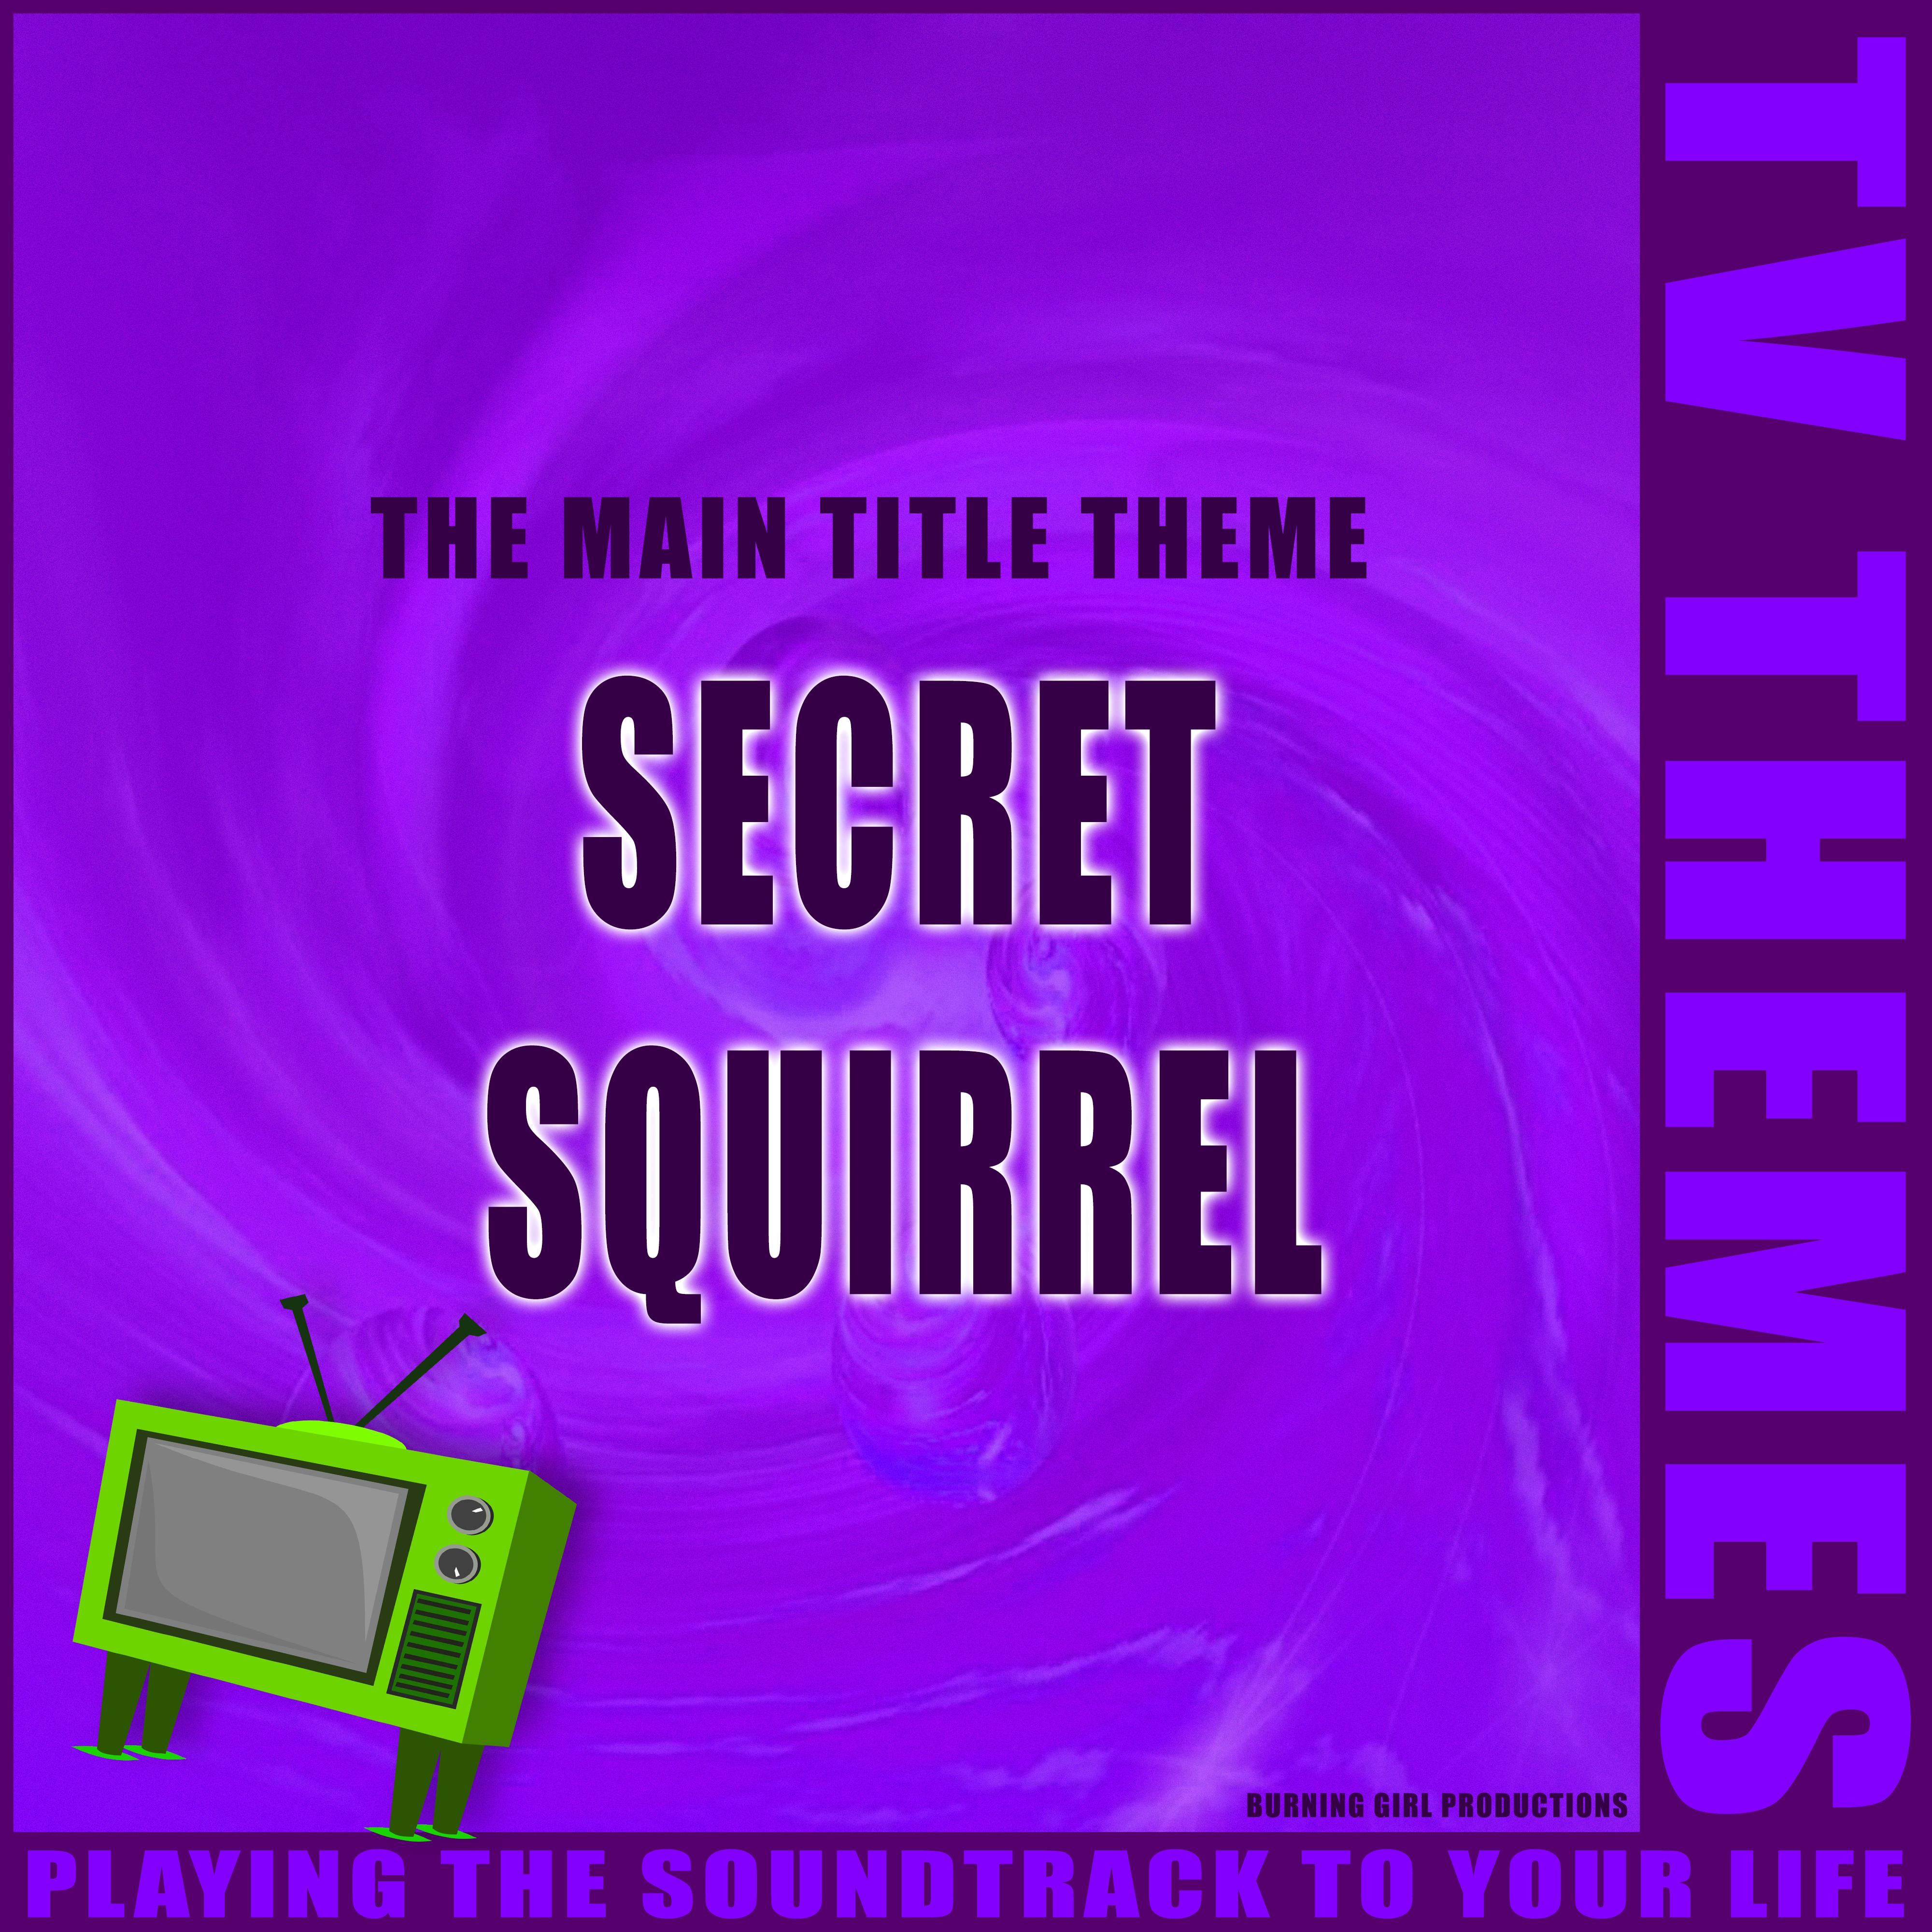 The Main Title Theme - Secret Squirrel